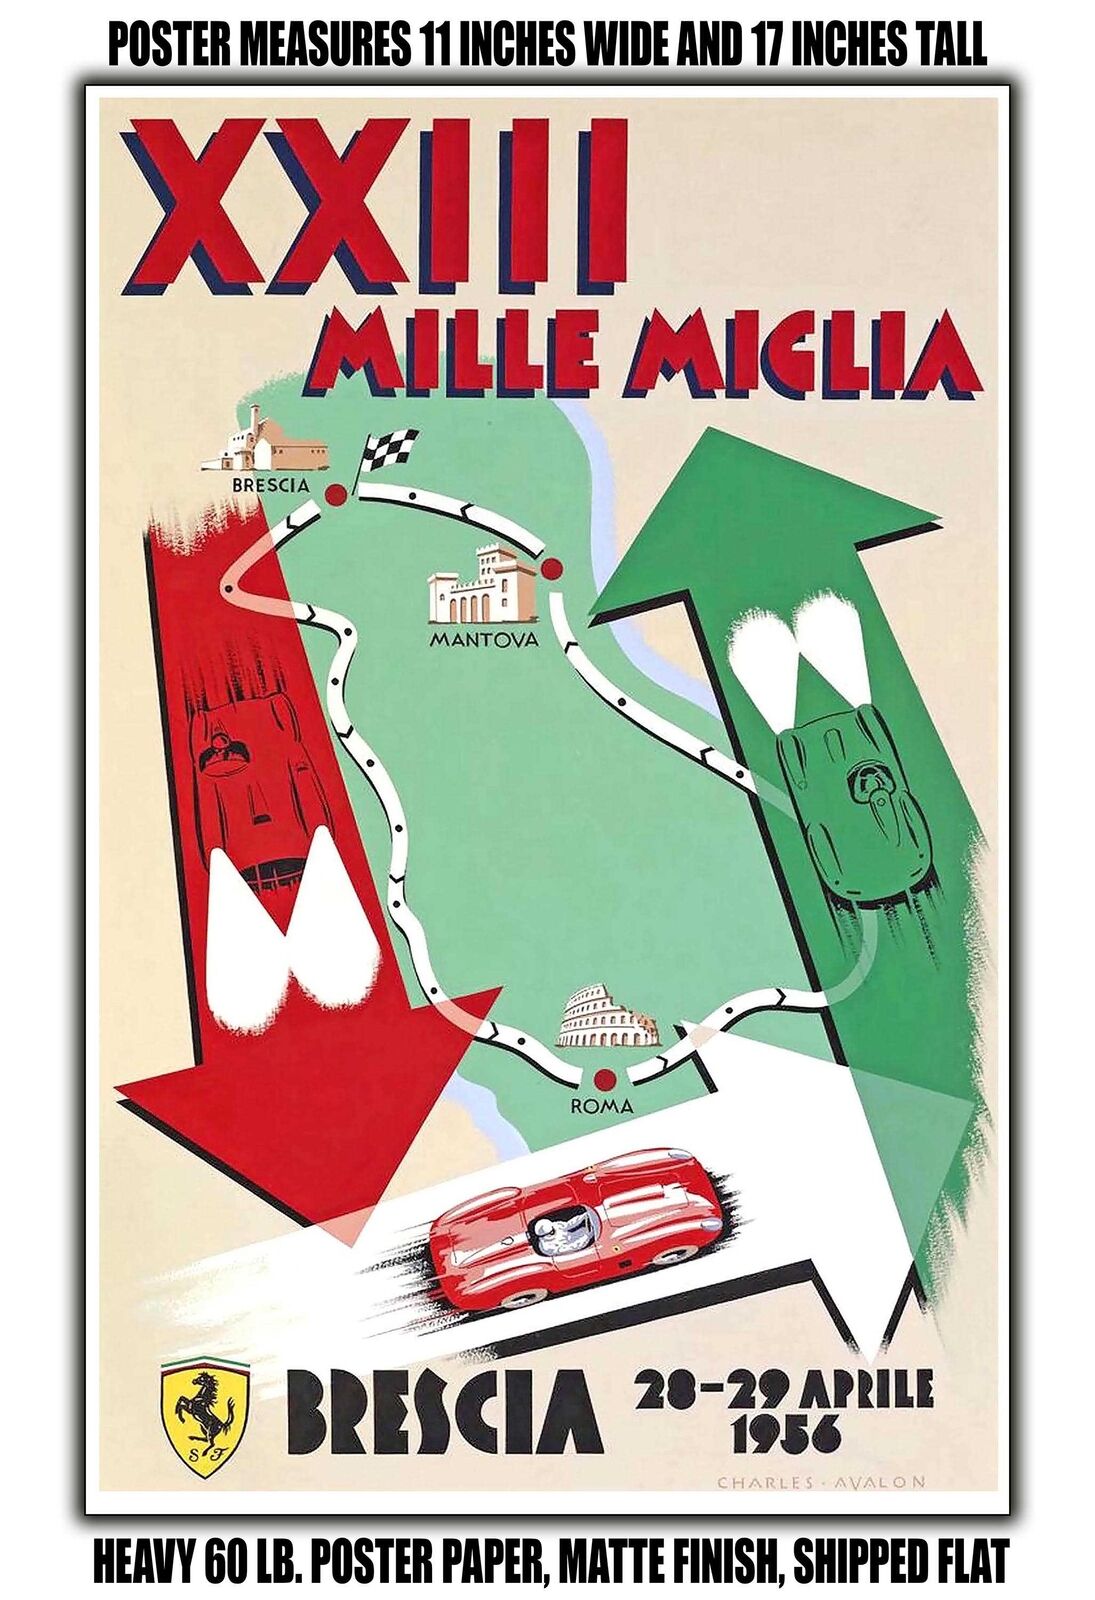 11x17 POSTER - 1956 XXIII Mille Miglia Brescia